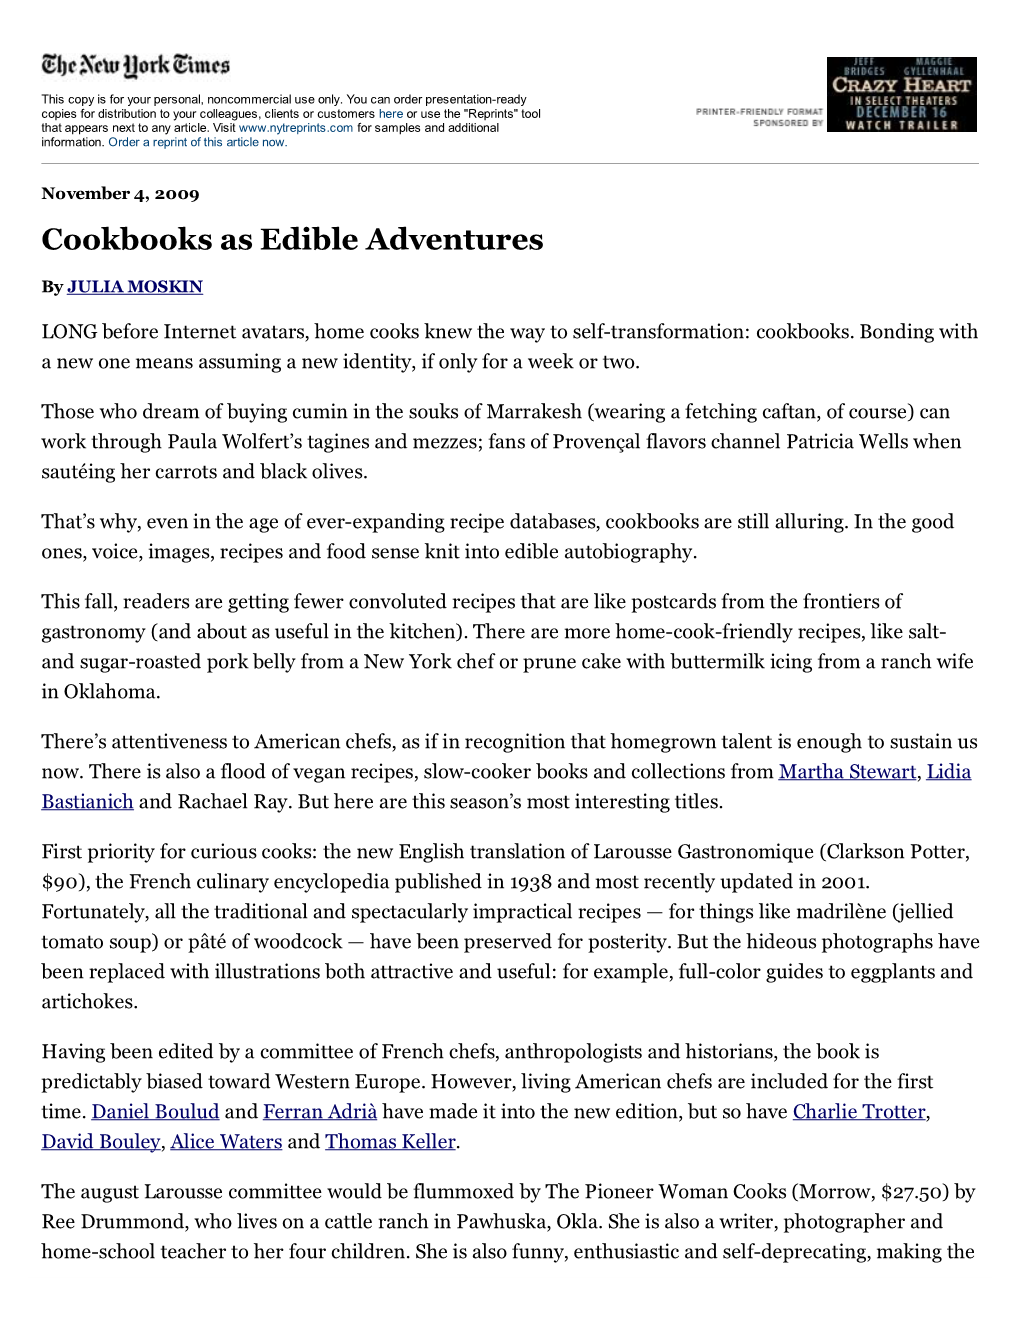 Cookbooks As Edible Adventures